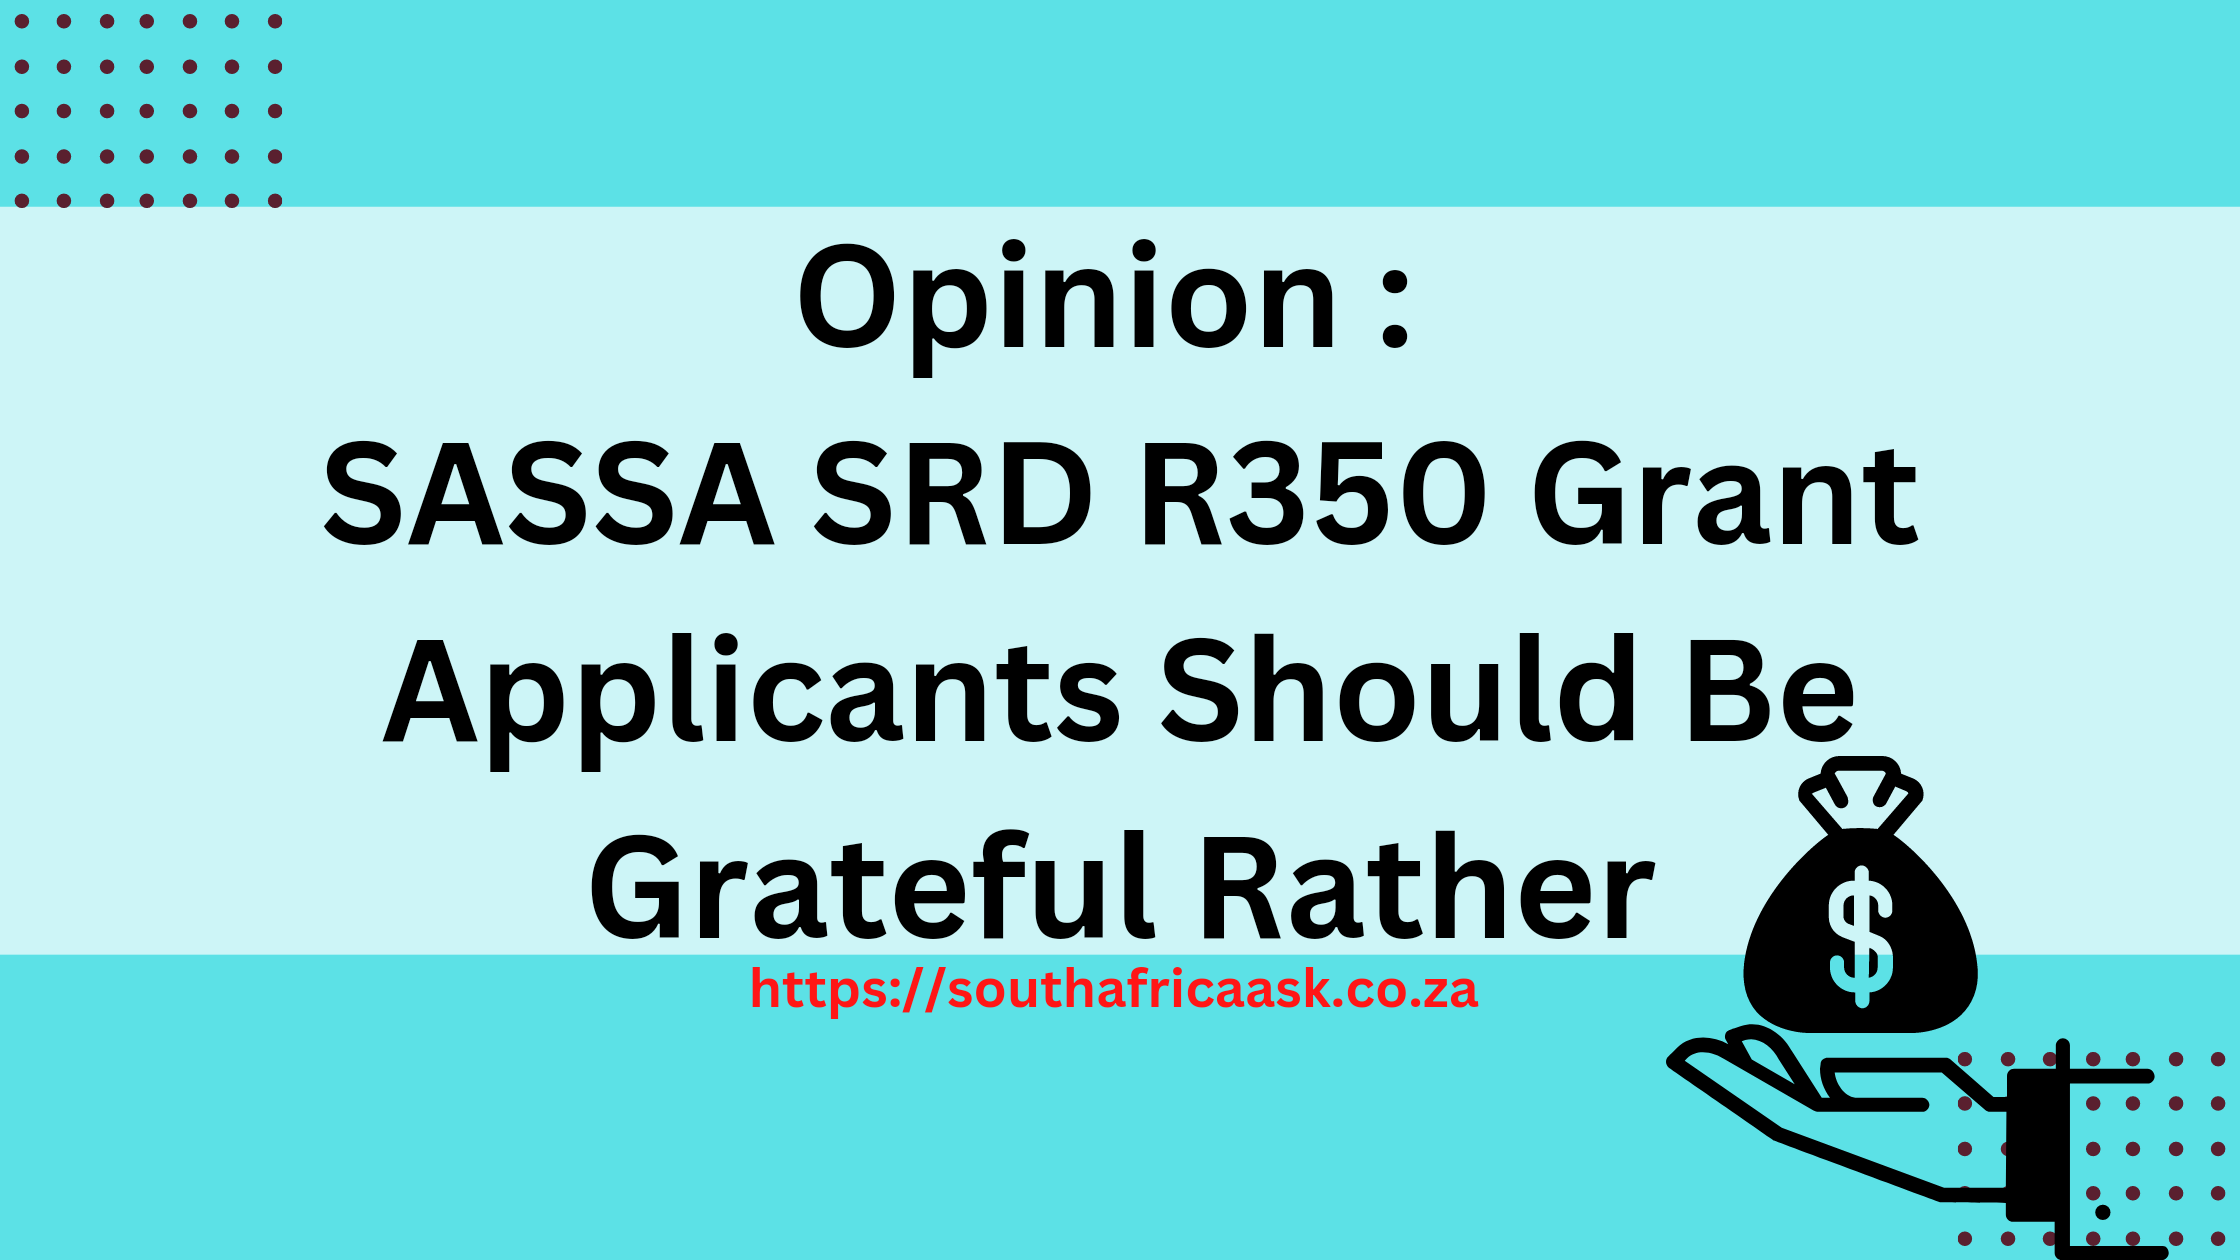 SASSA SRD R350 Grant Applicants Should Be Grateful Rather